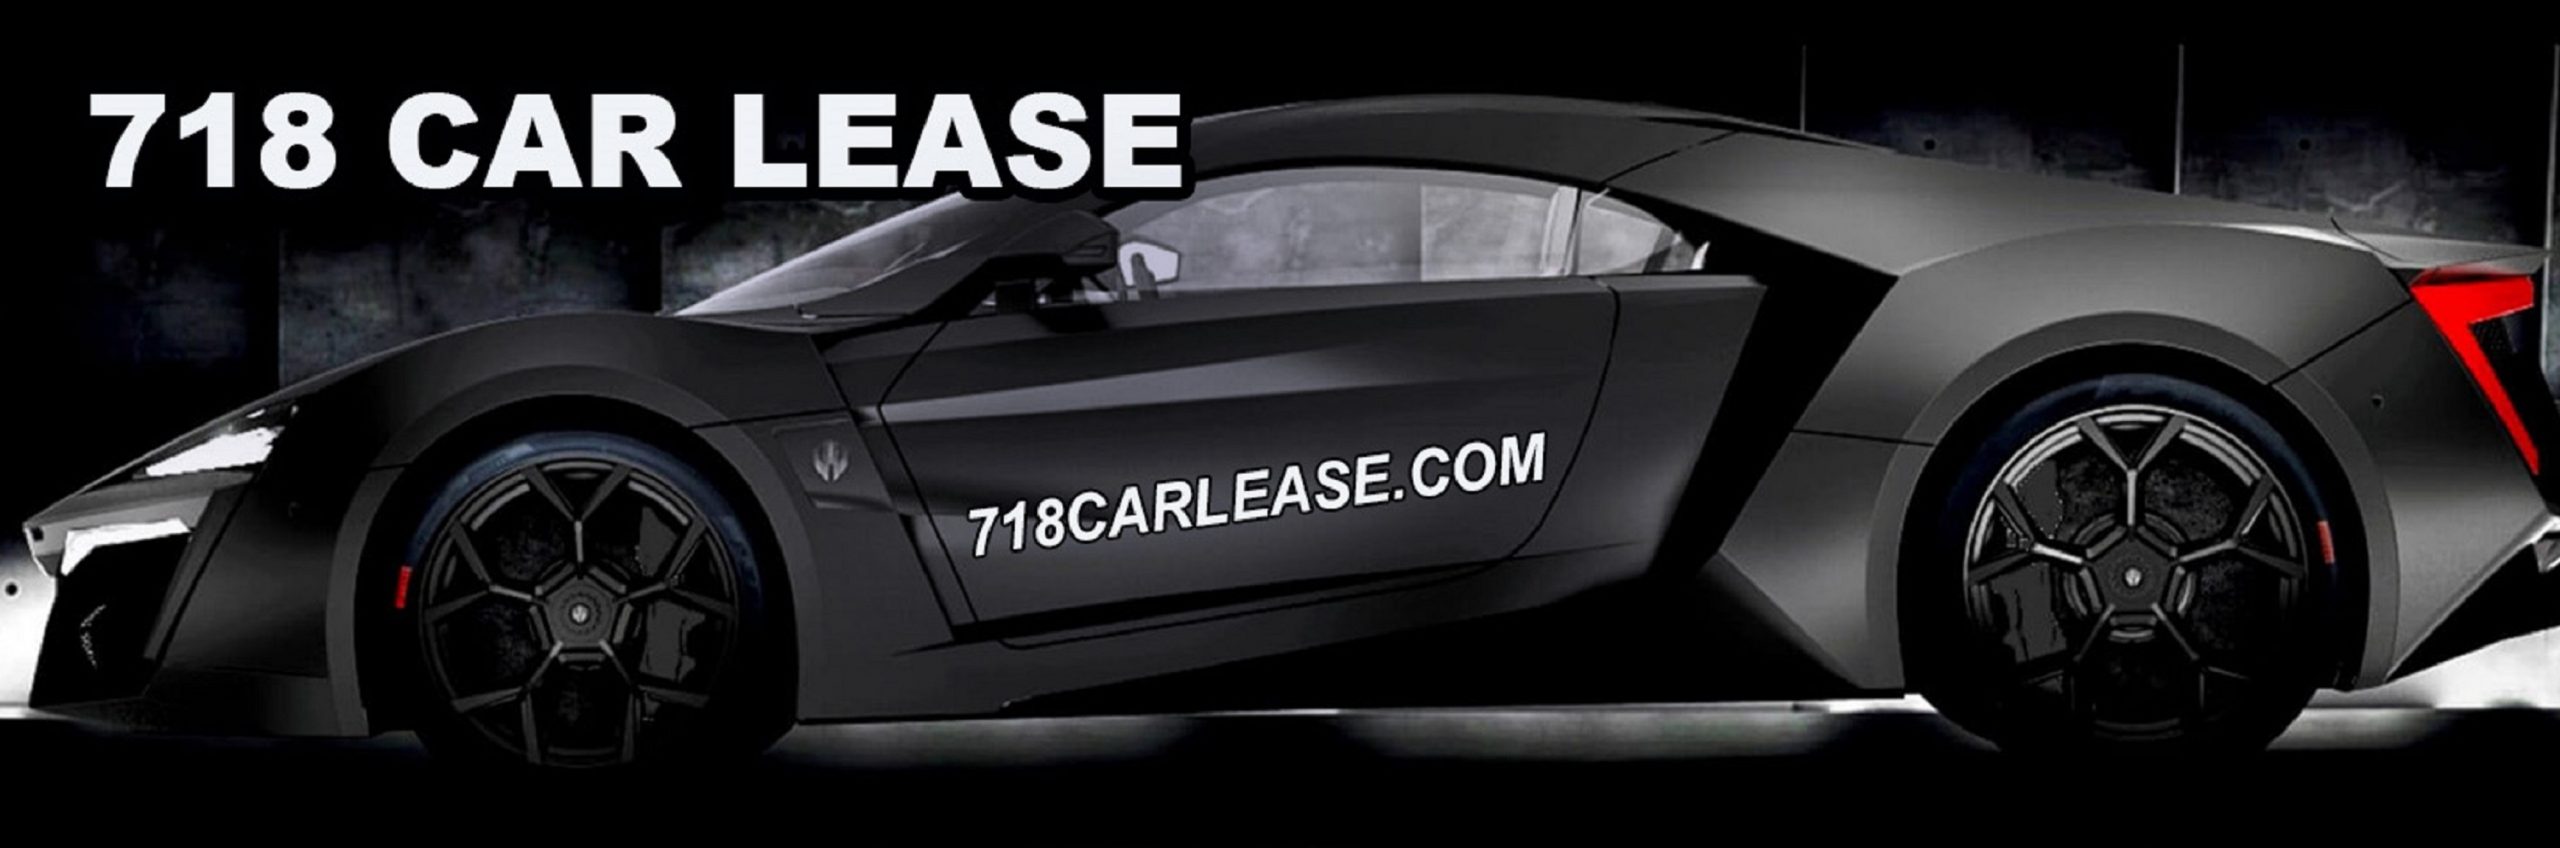 718 Car Lease – Best Car Lease Broker